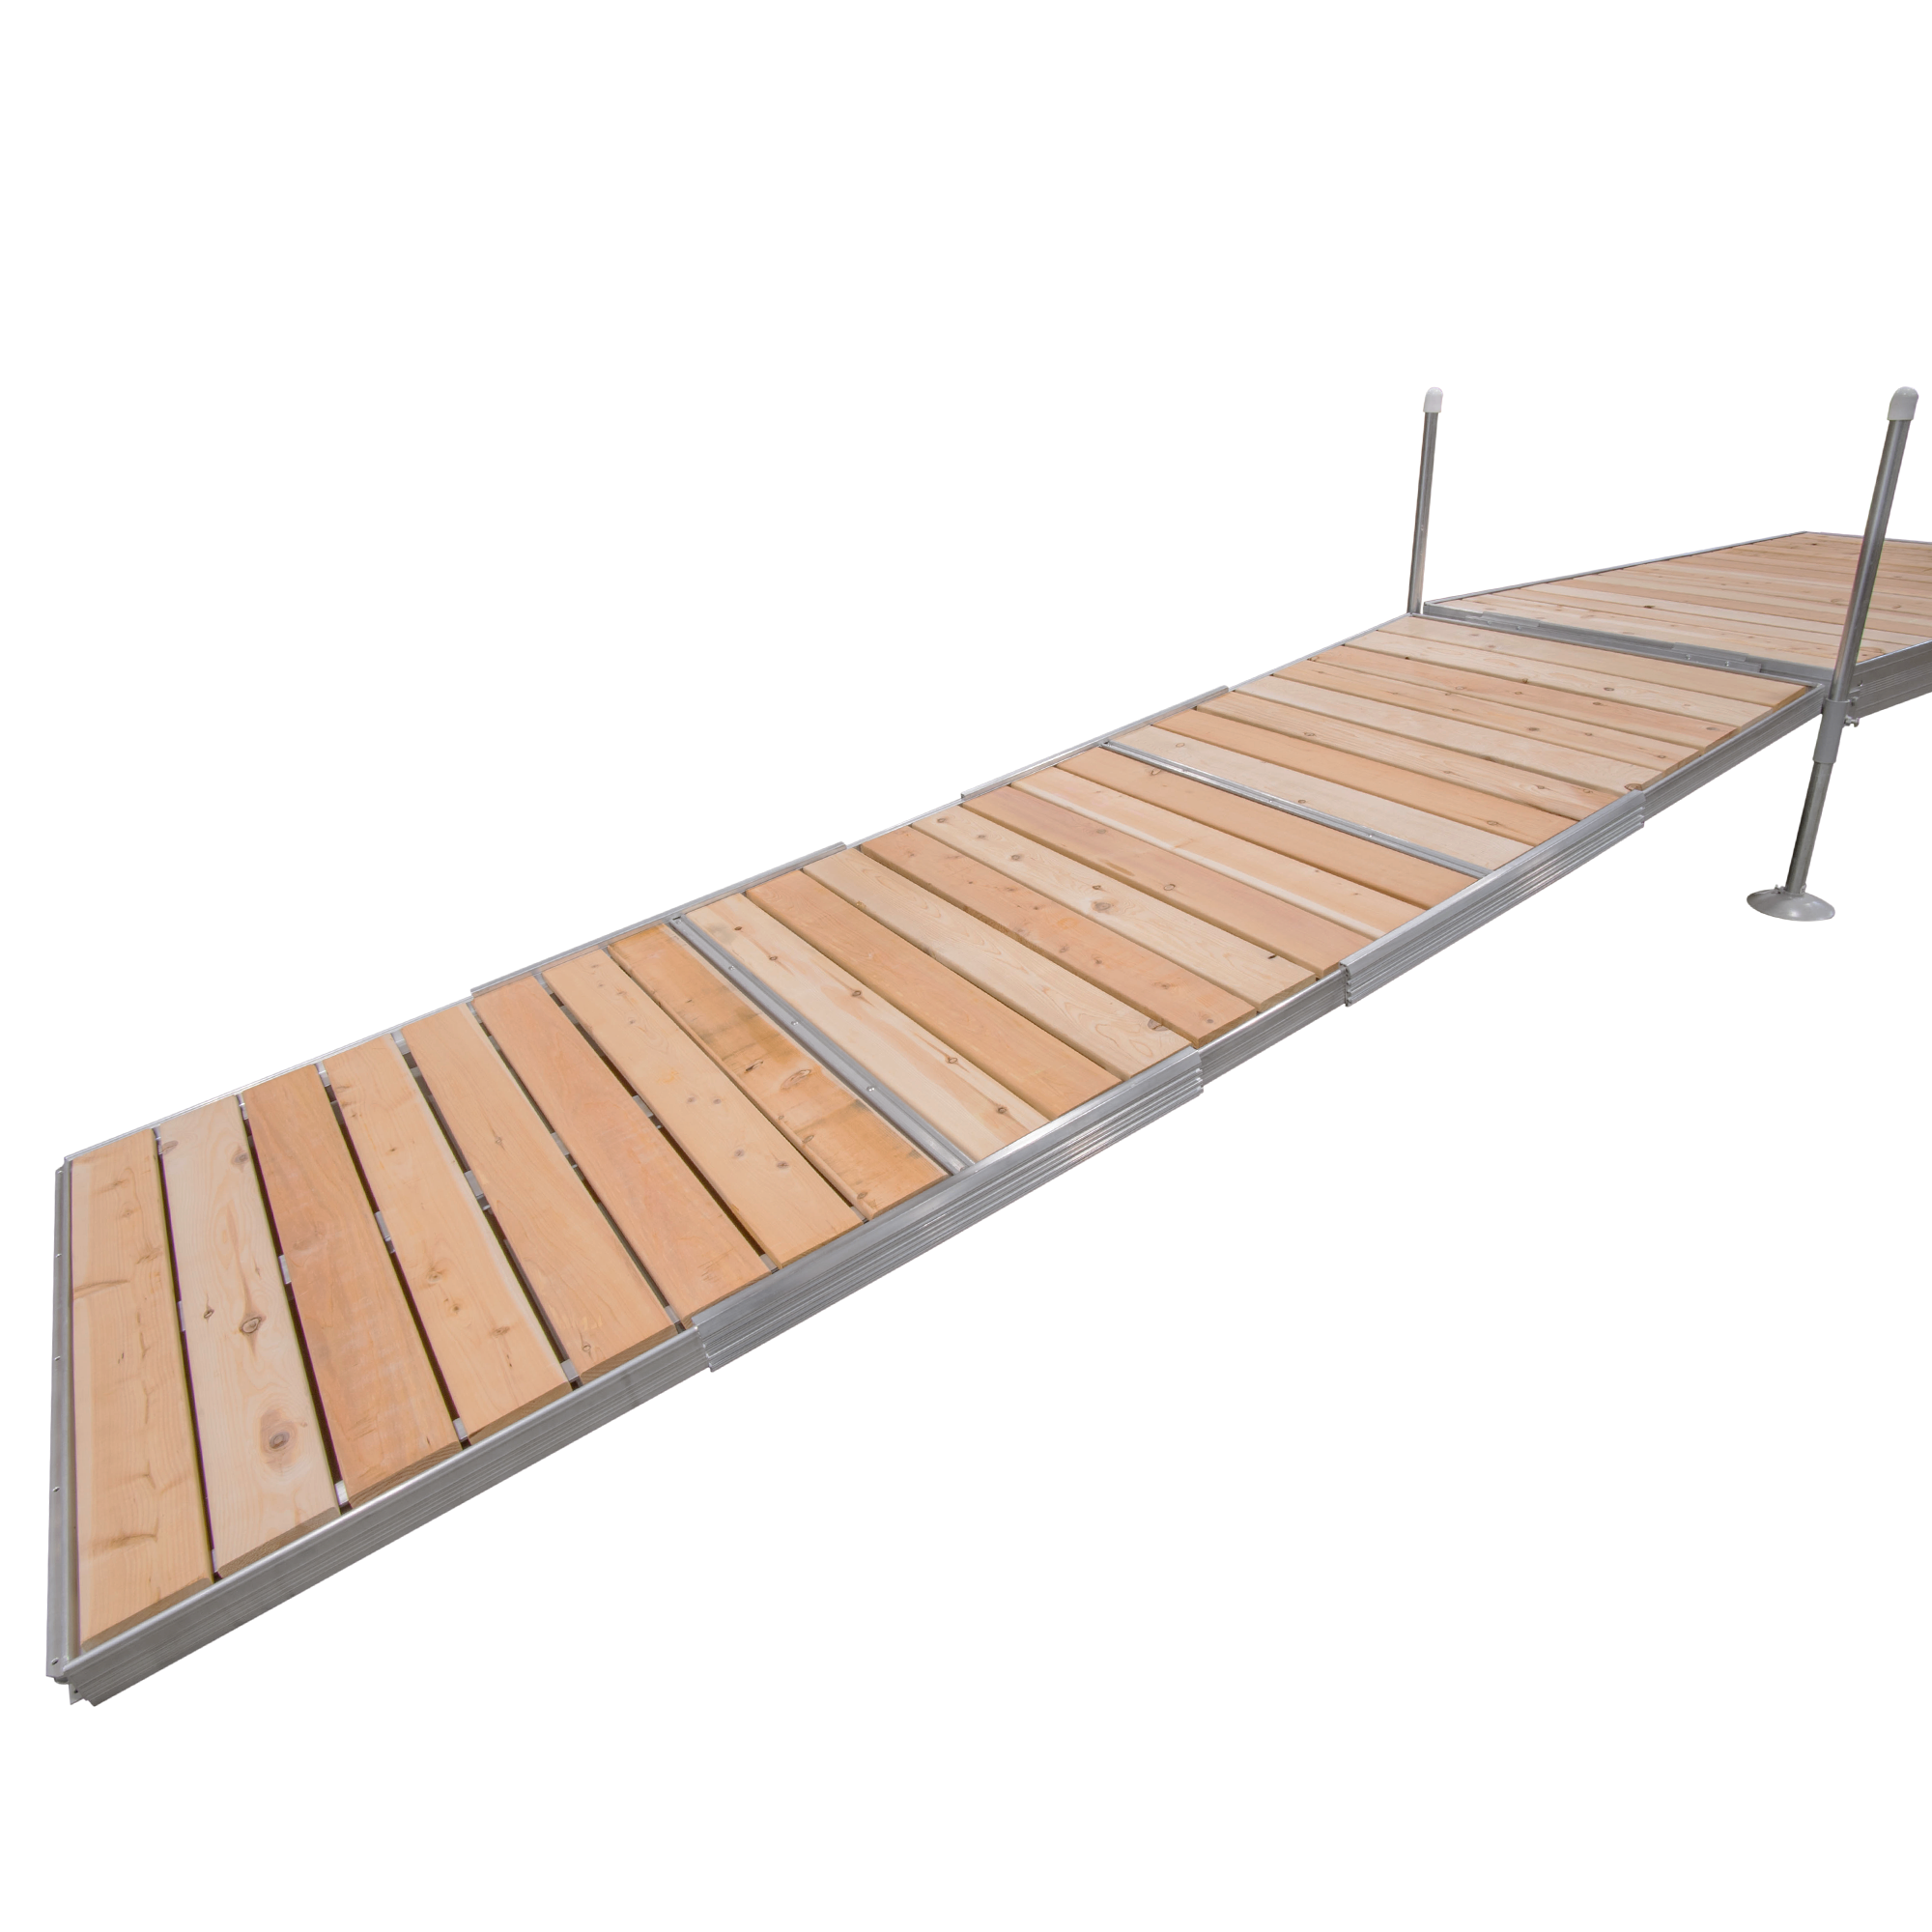 12' Modular Aluminum Gangway with Cedar Decking